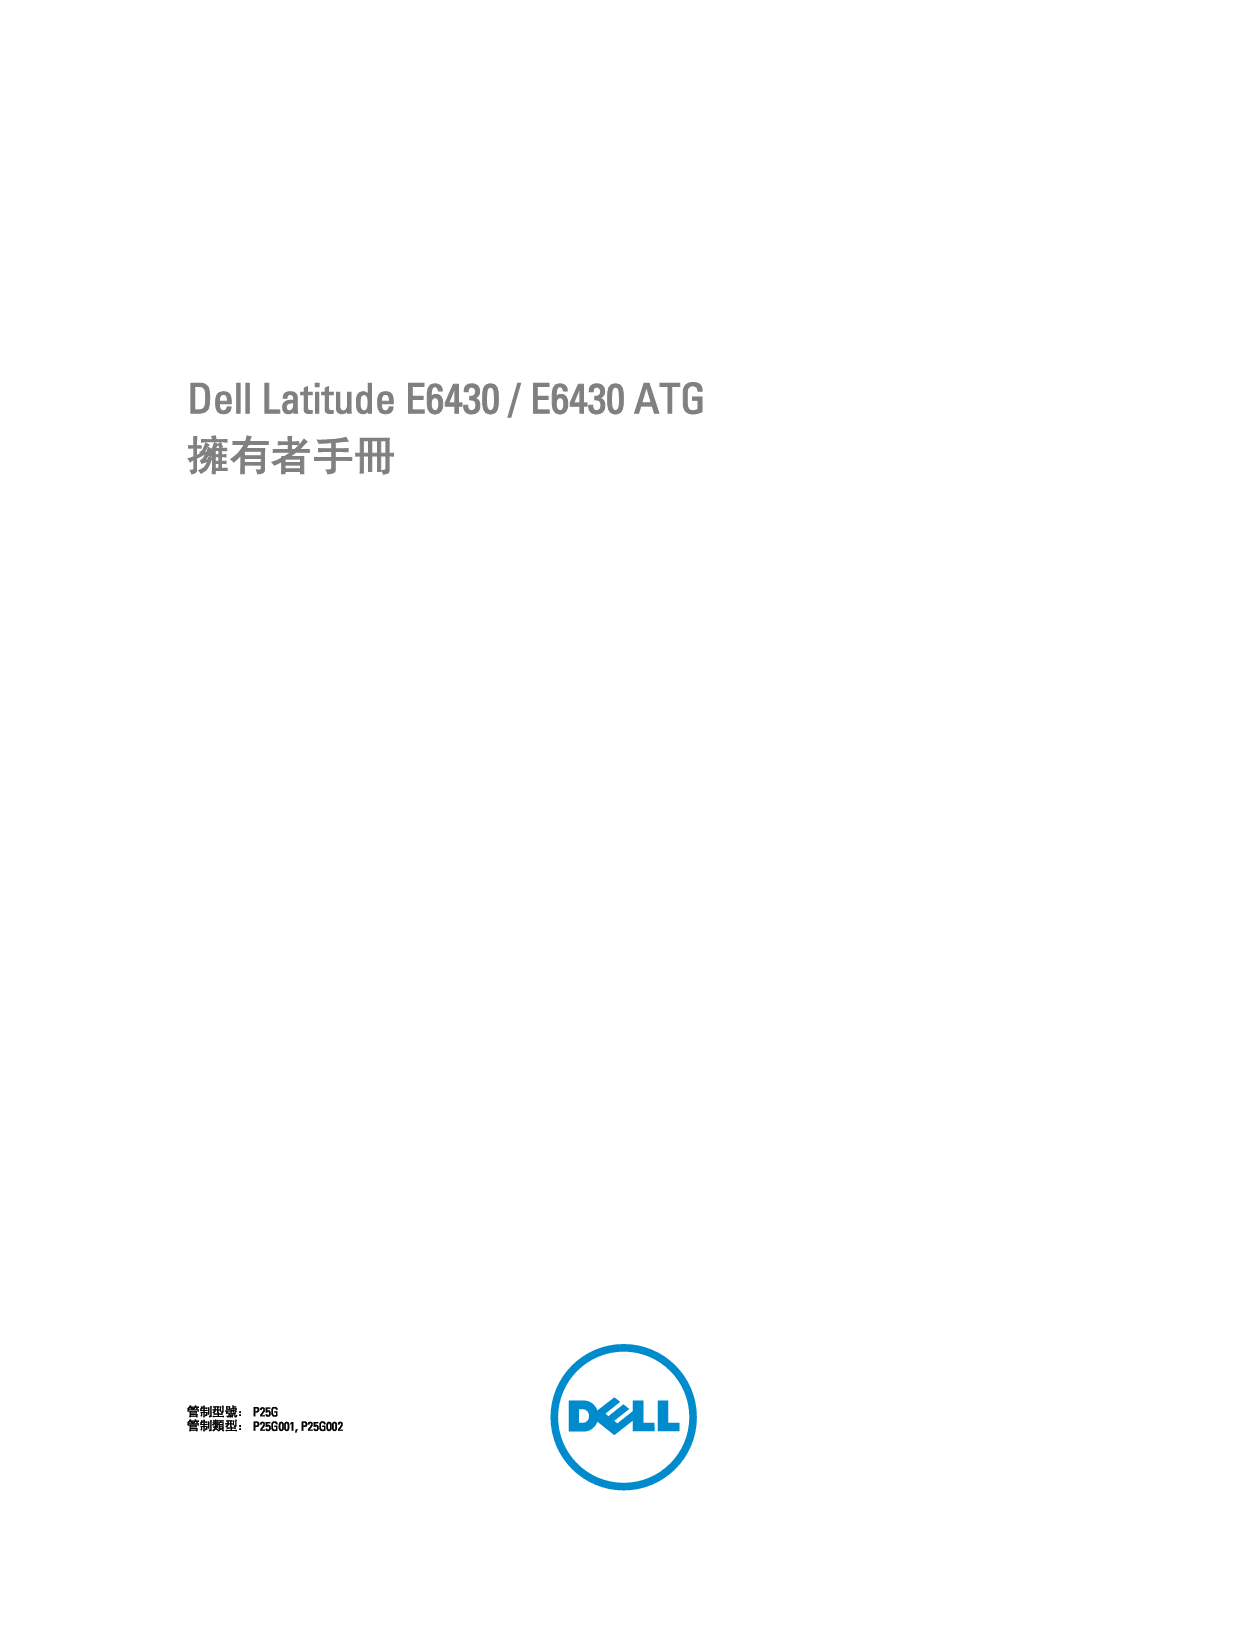 戴尔 Dell Latitude E6430 繁体 用户手册 封面